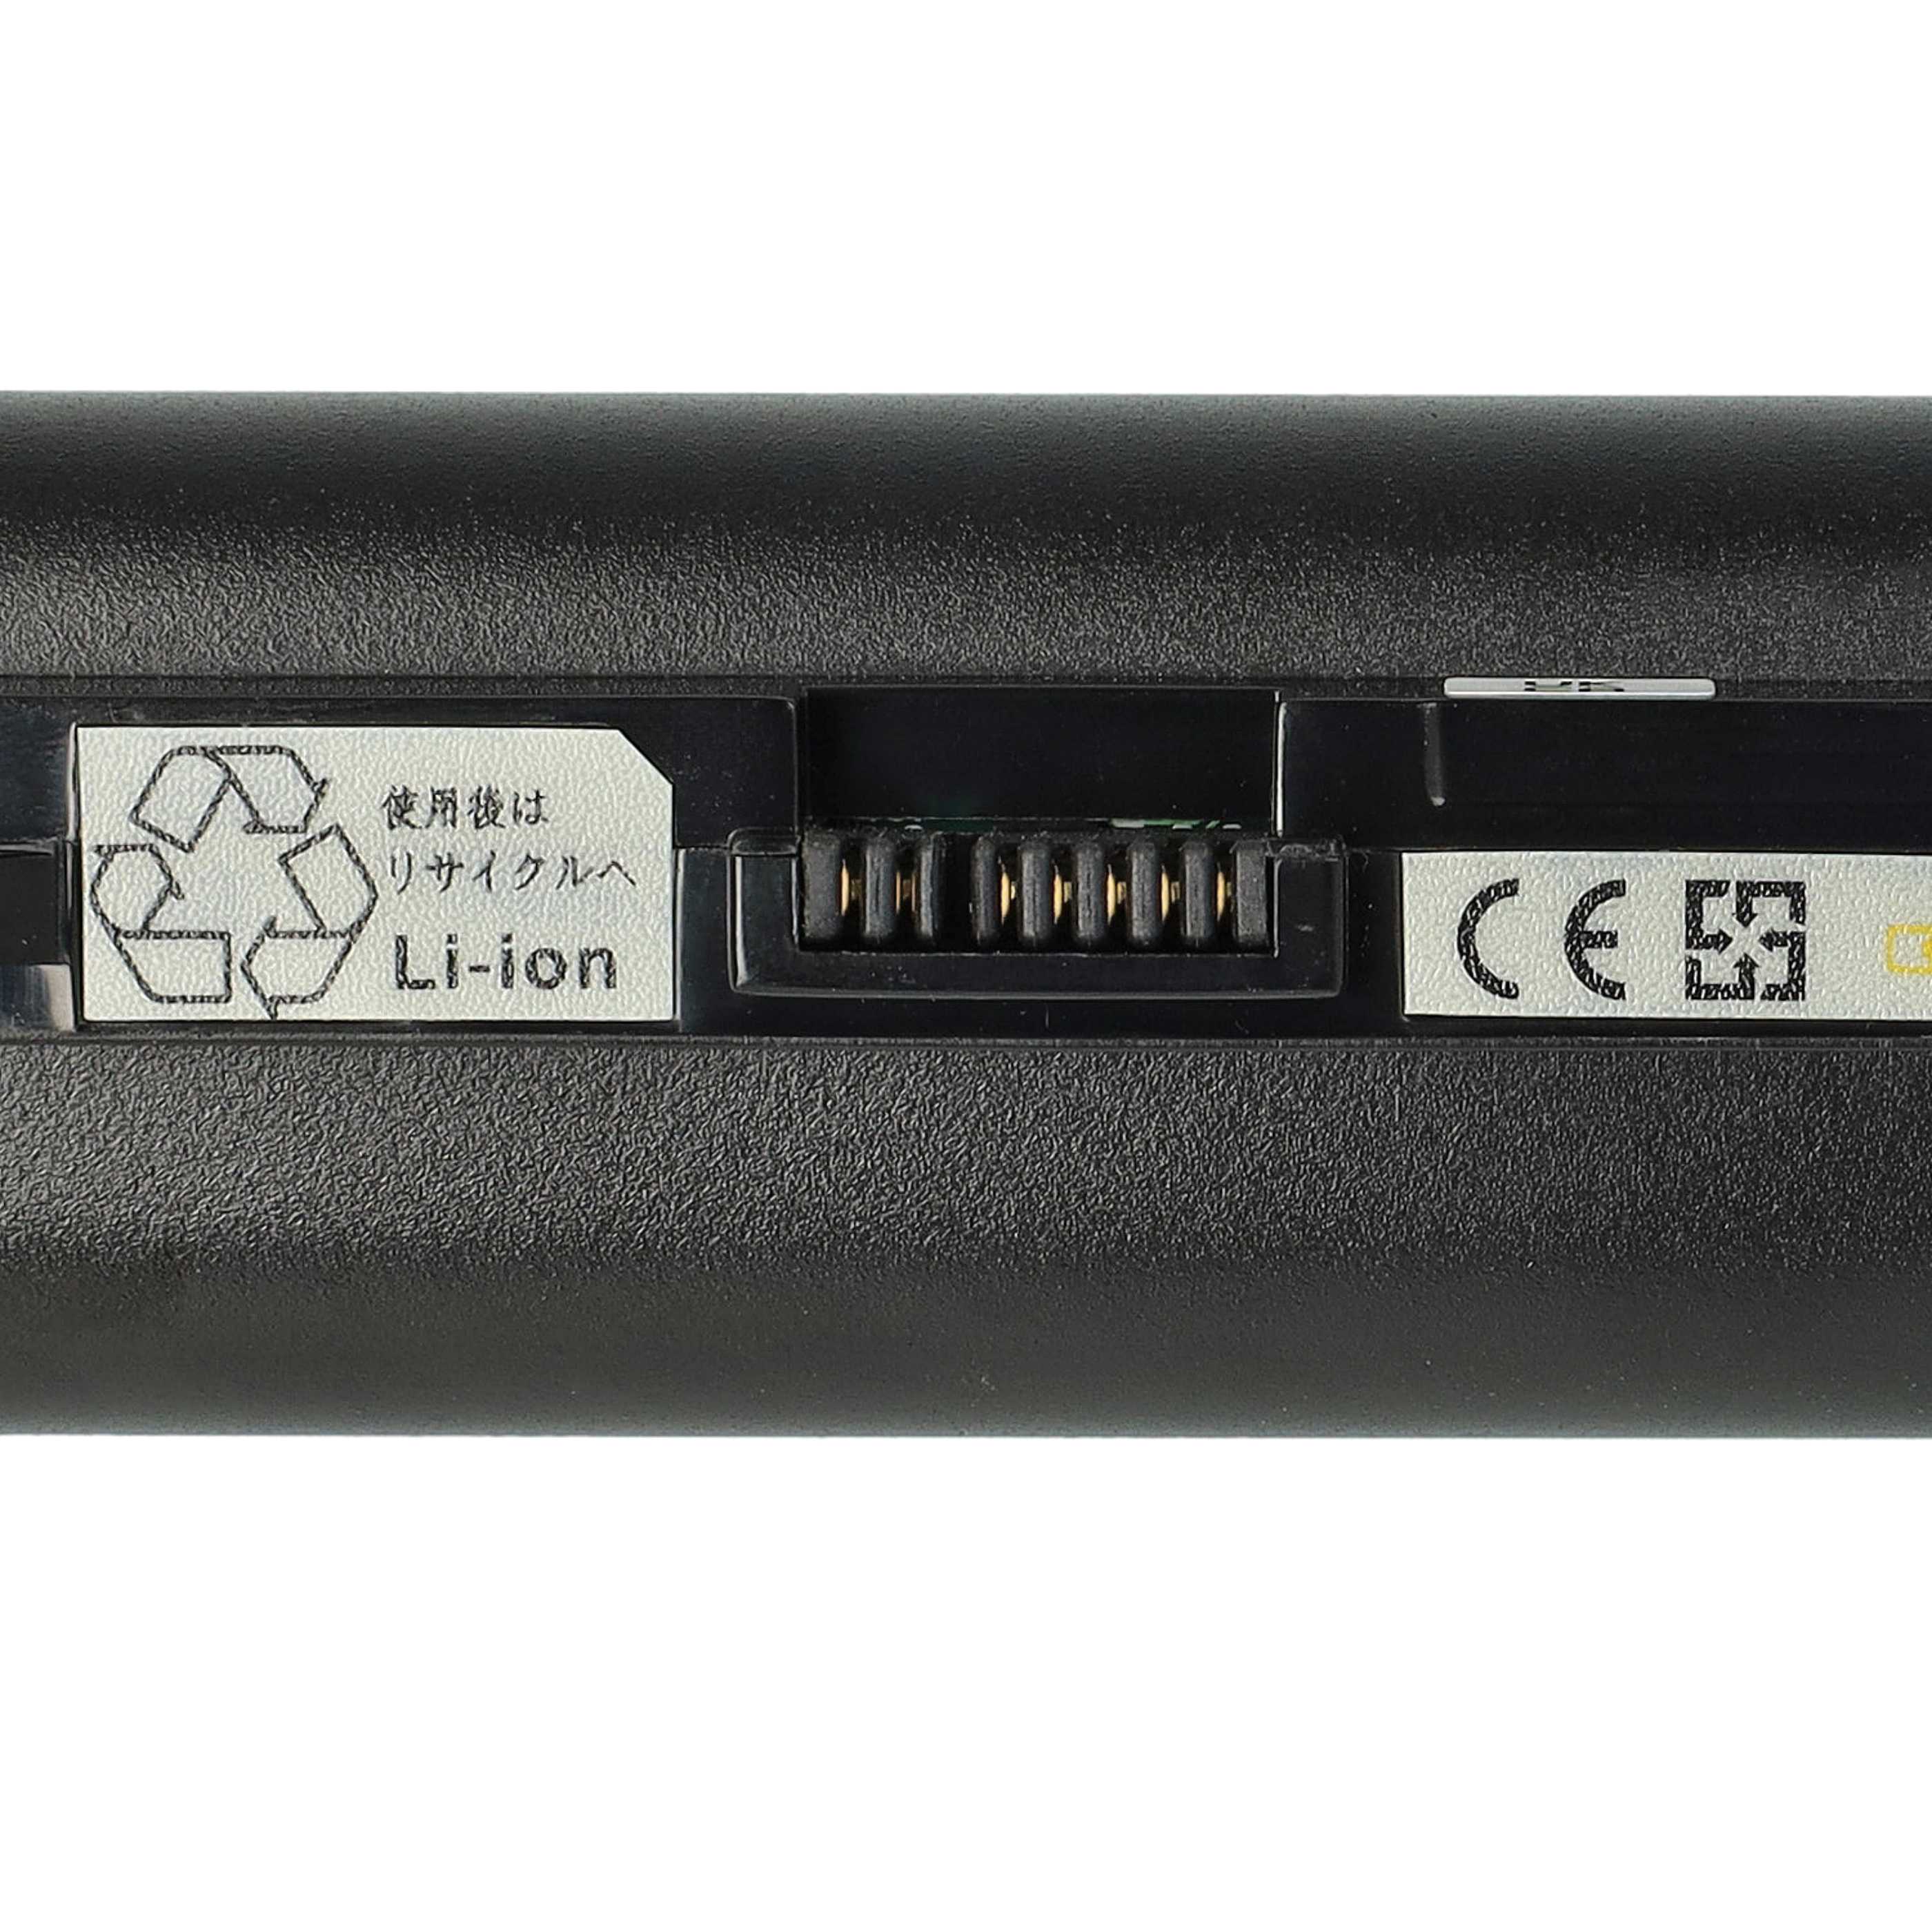 Akumulator do laptopa zamiennik Lenovo 55Y9382, 55Y9383, 57Y6275, 57Y6273 - 6600 mAh 11,1 V Li-Ion, czarny